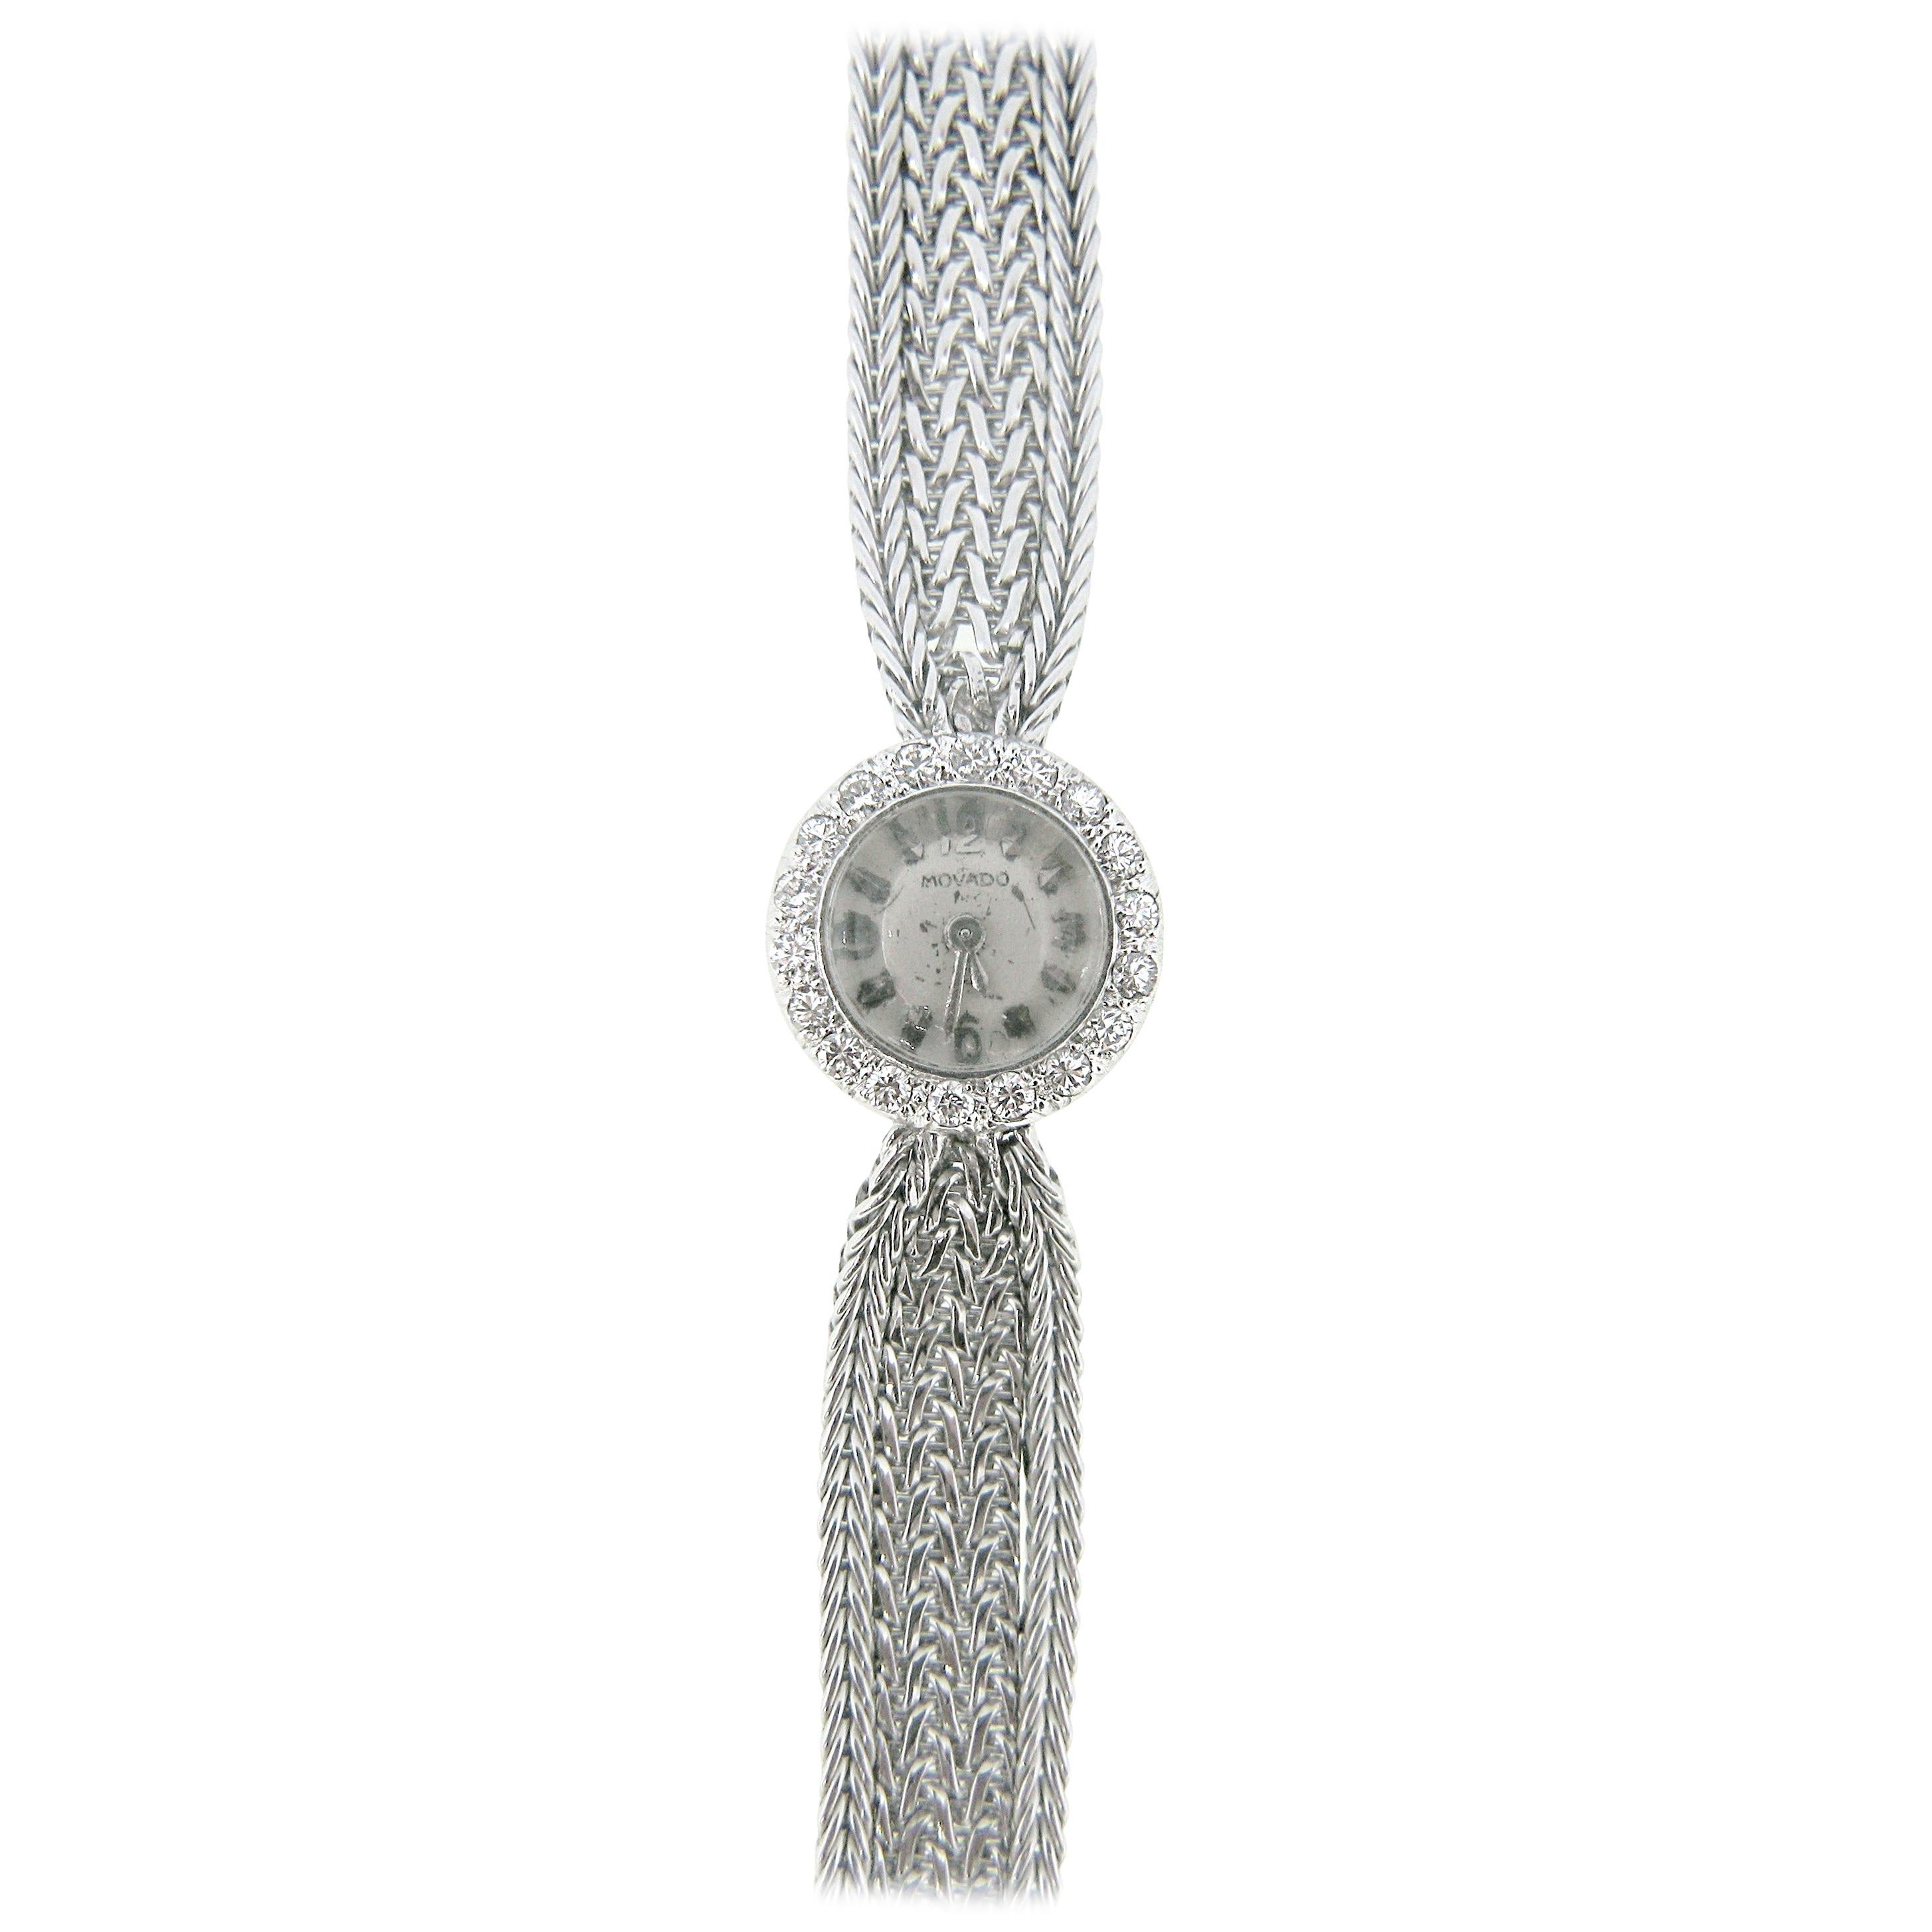 Vintage Movado Lady Diamonds White Gold Manual Wind Wristwatch For Sale